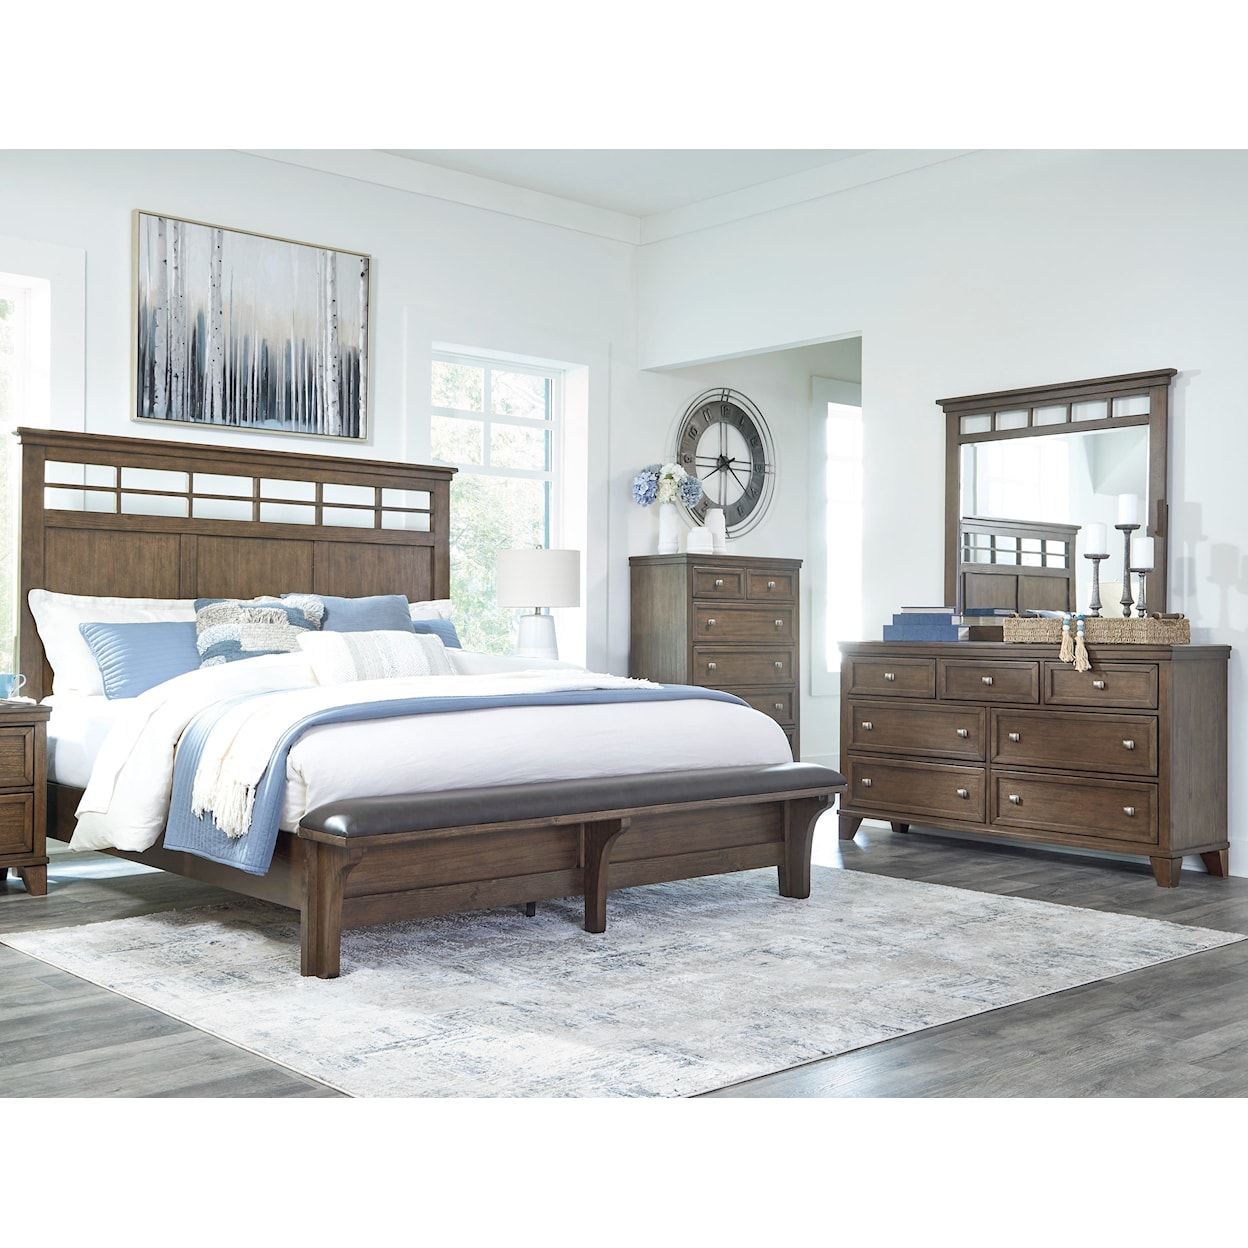 Ashley Furniture Benchcraft Shawbeck King Bedroom Set